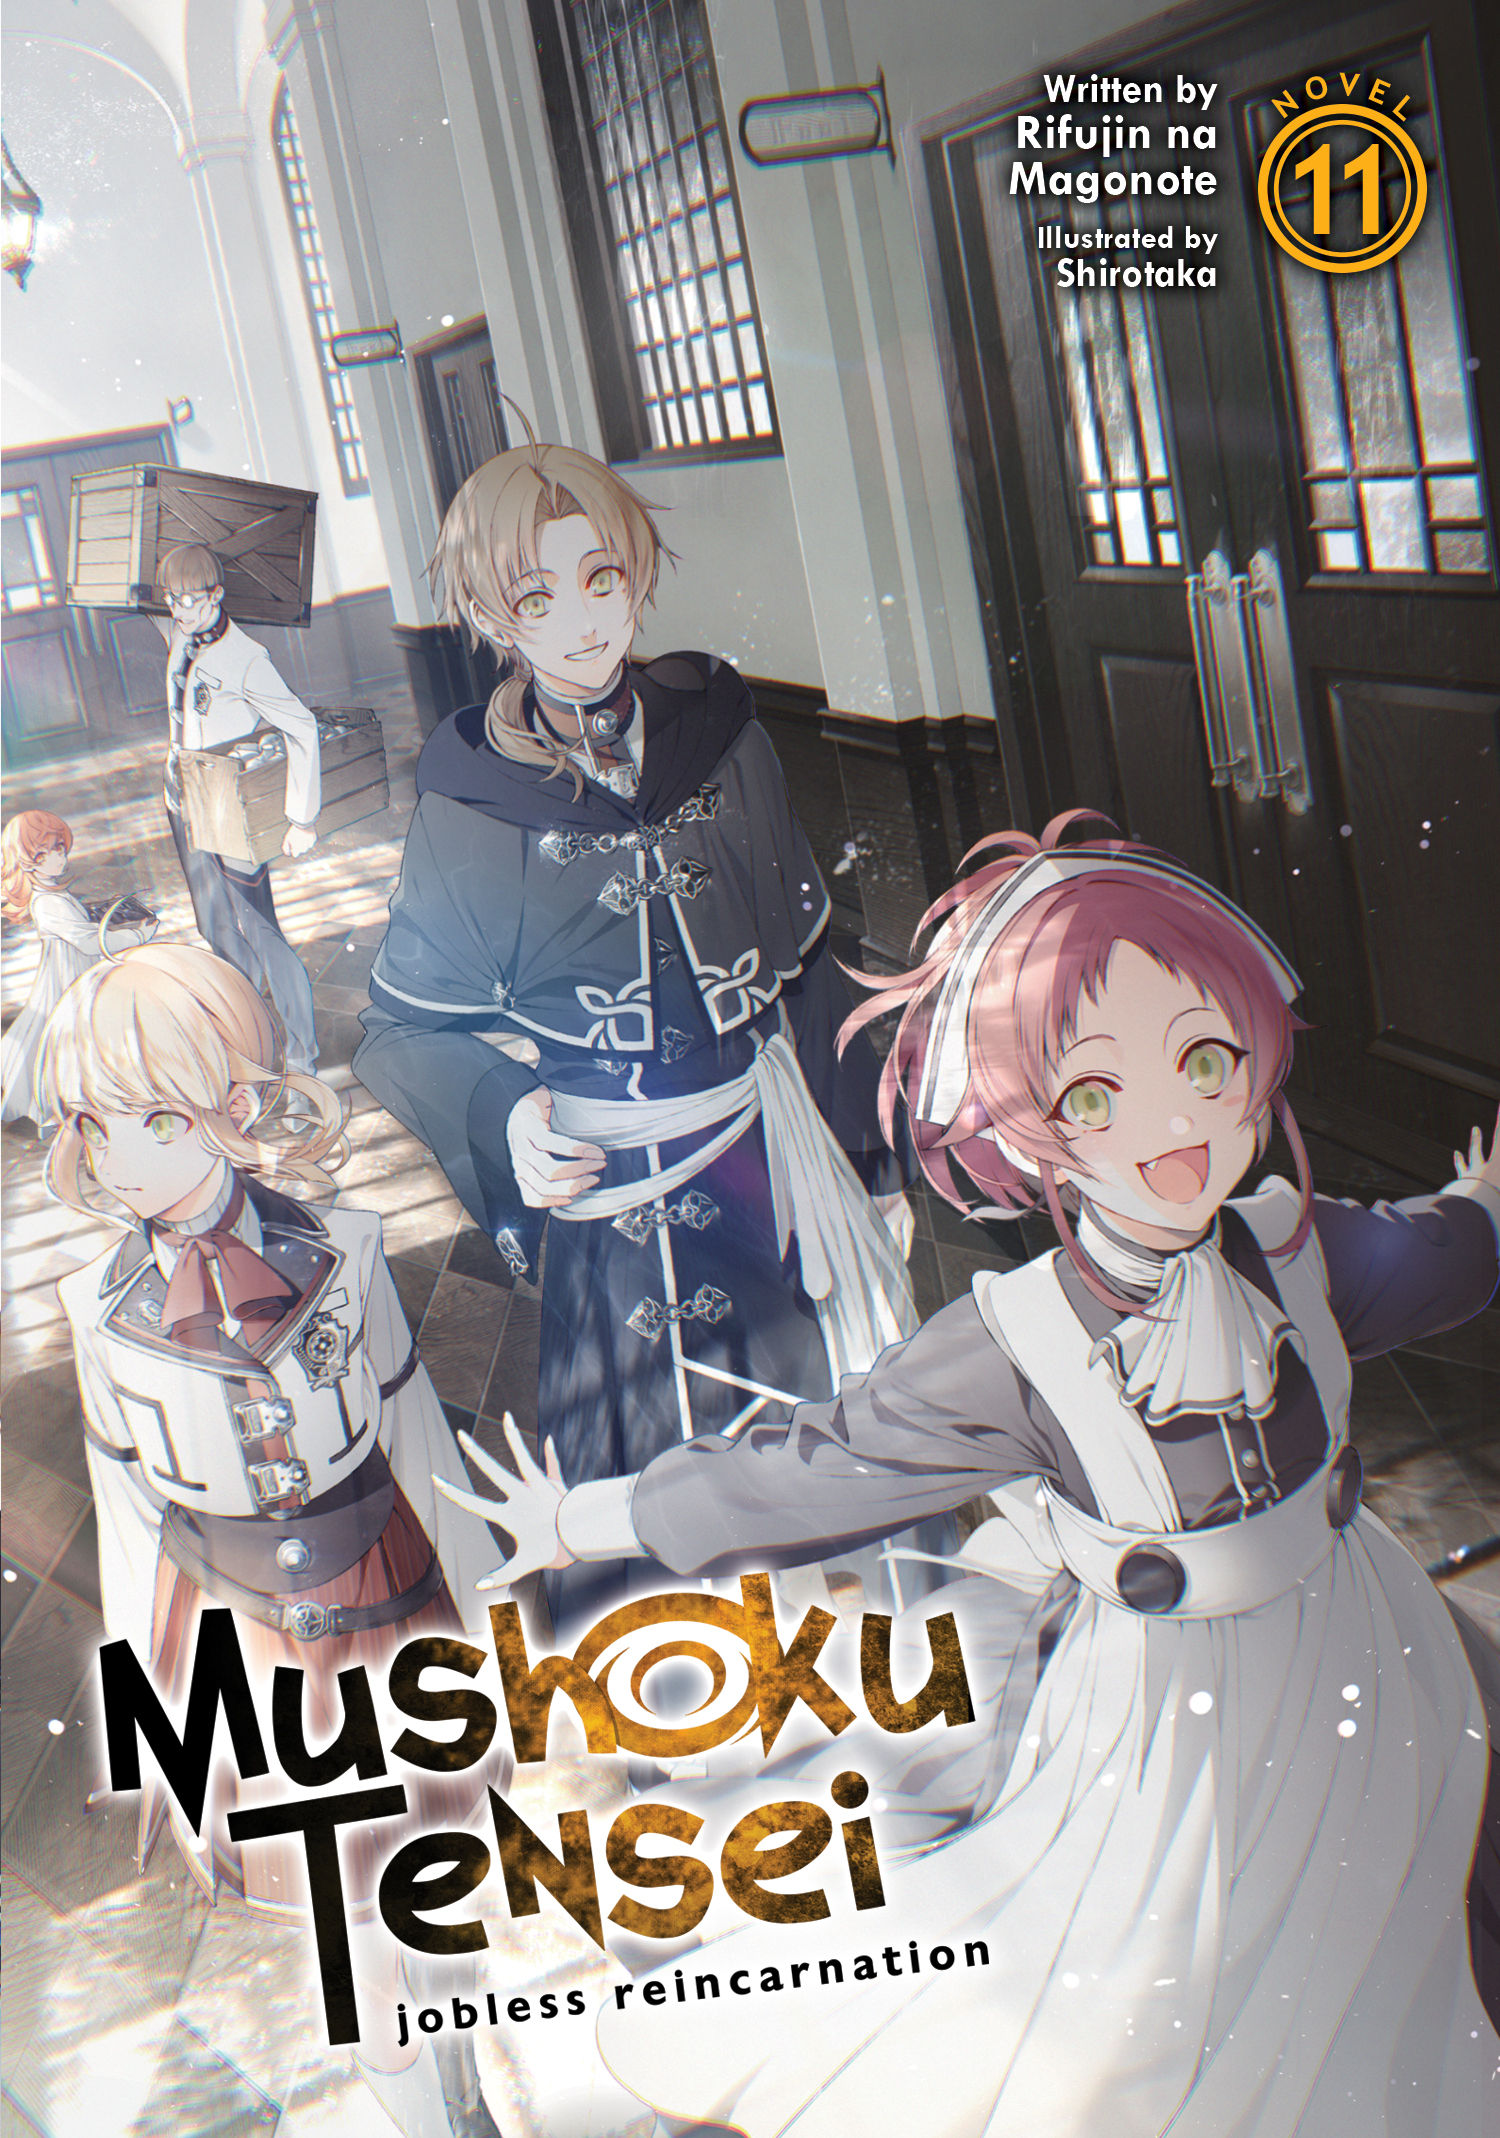 Seven Seas Entertainment Launches Audiobook for Mushoku Tensei Light Novel  Series